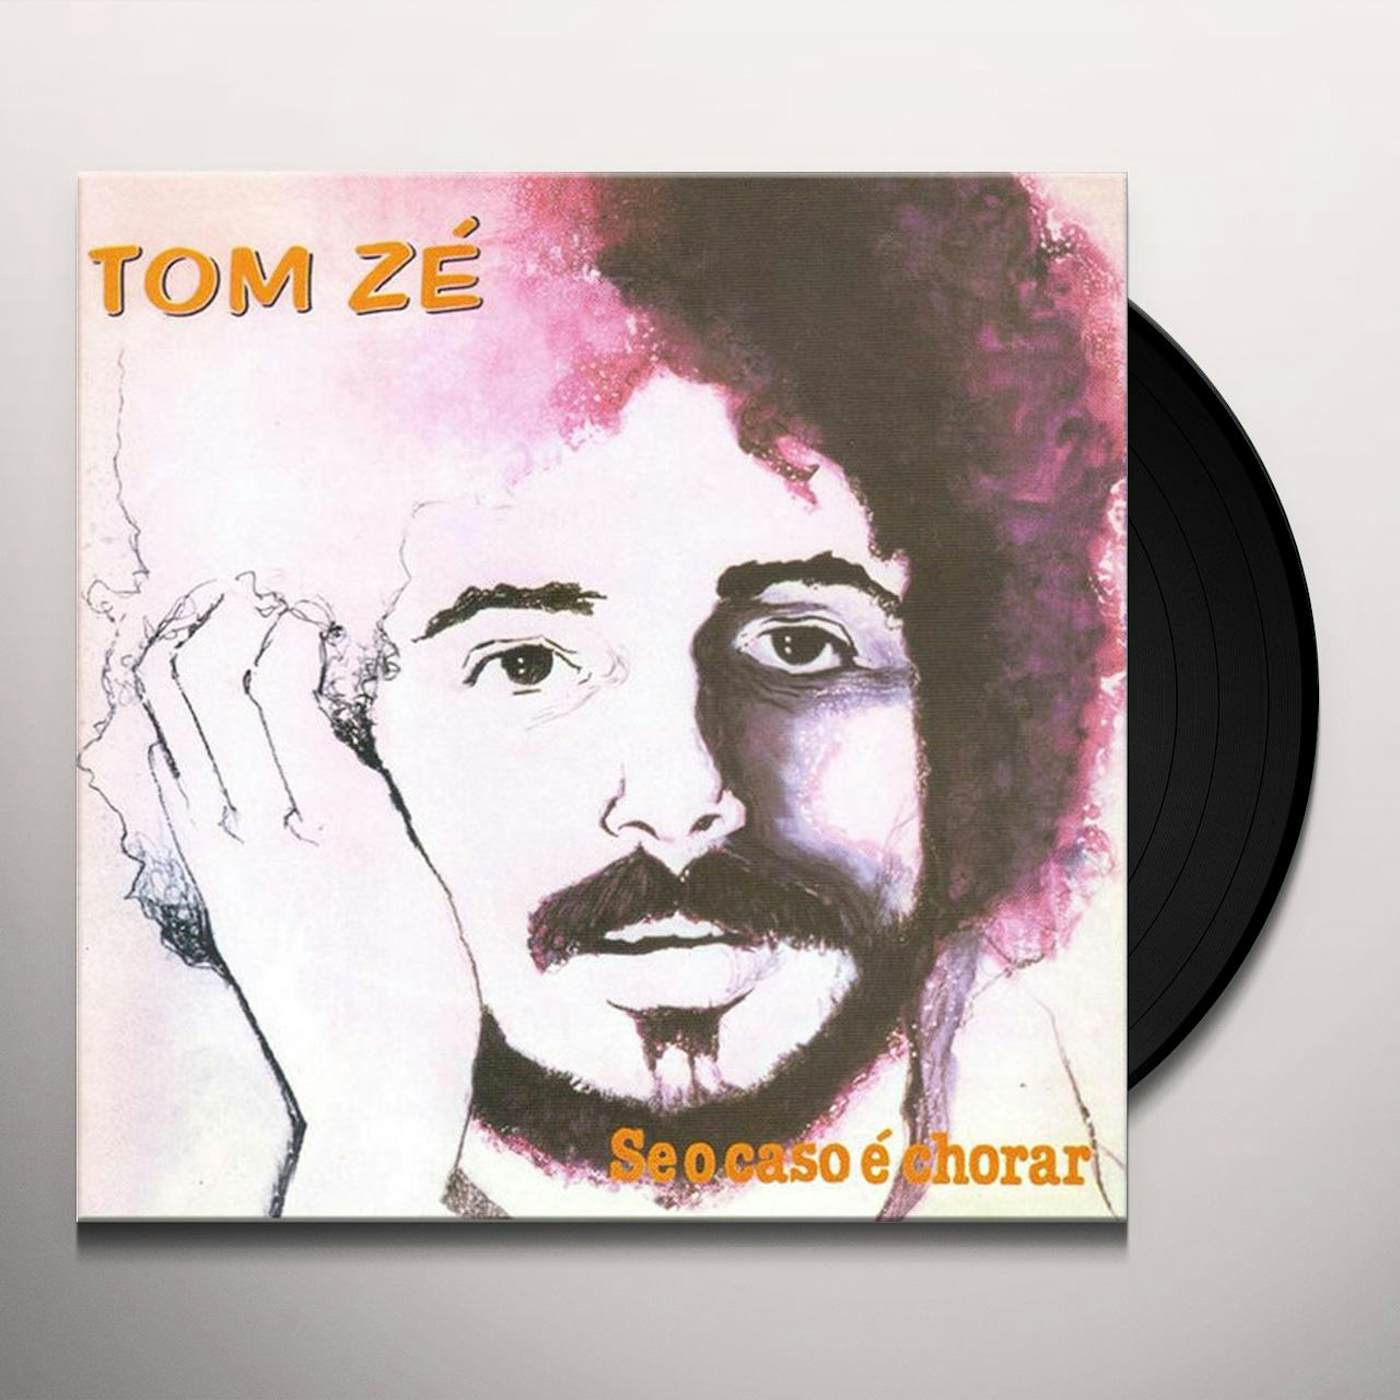 Tom Zé SE O CASO E CHORAR Vinyl Record